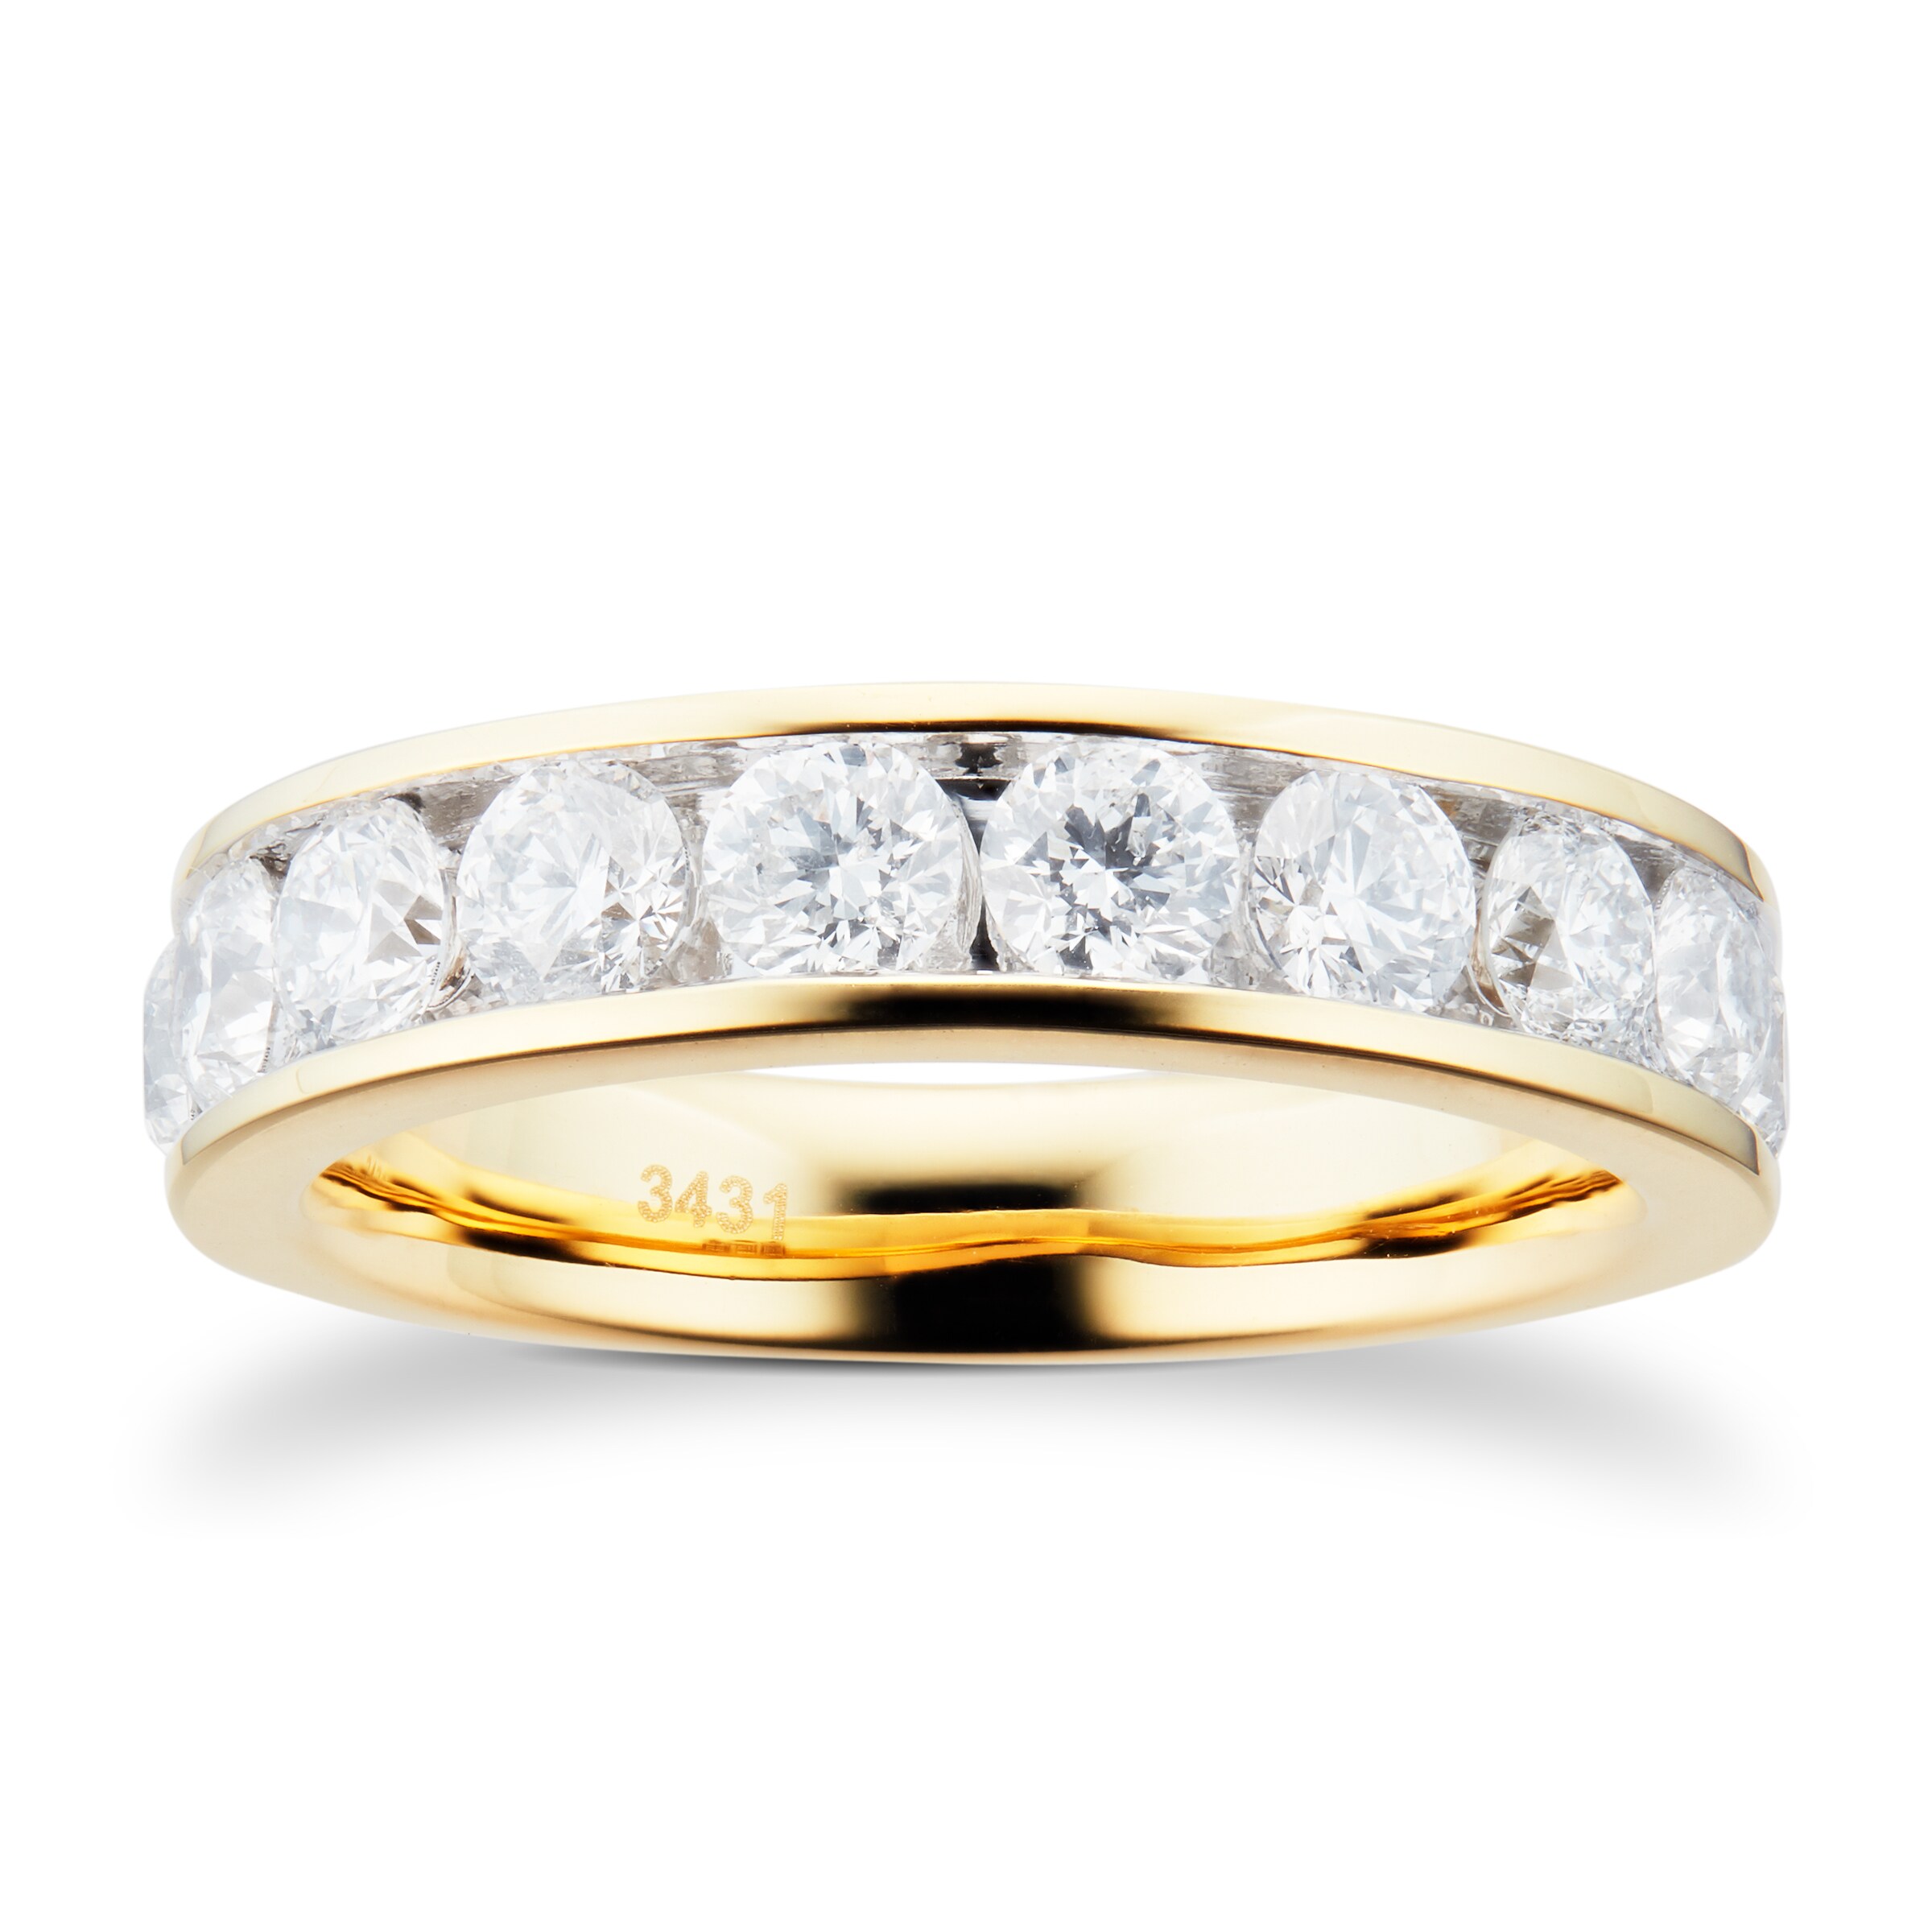 18ct Yellow Gold 1.50ct Brilliant Cut Goldsmiths Brightest Diamond Eternity Ring - Ring Size O